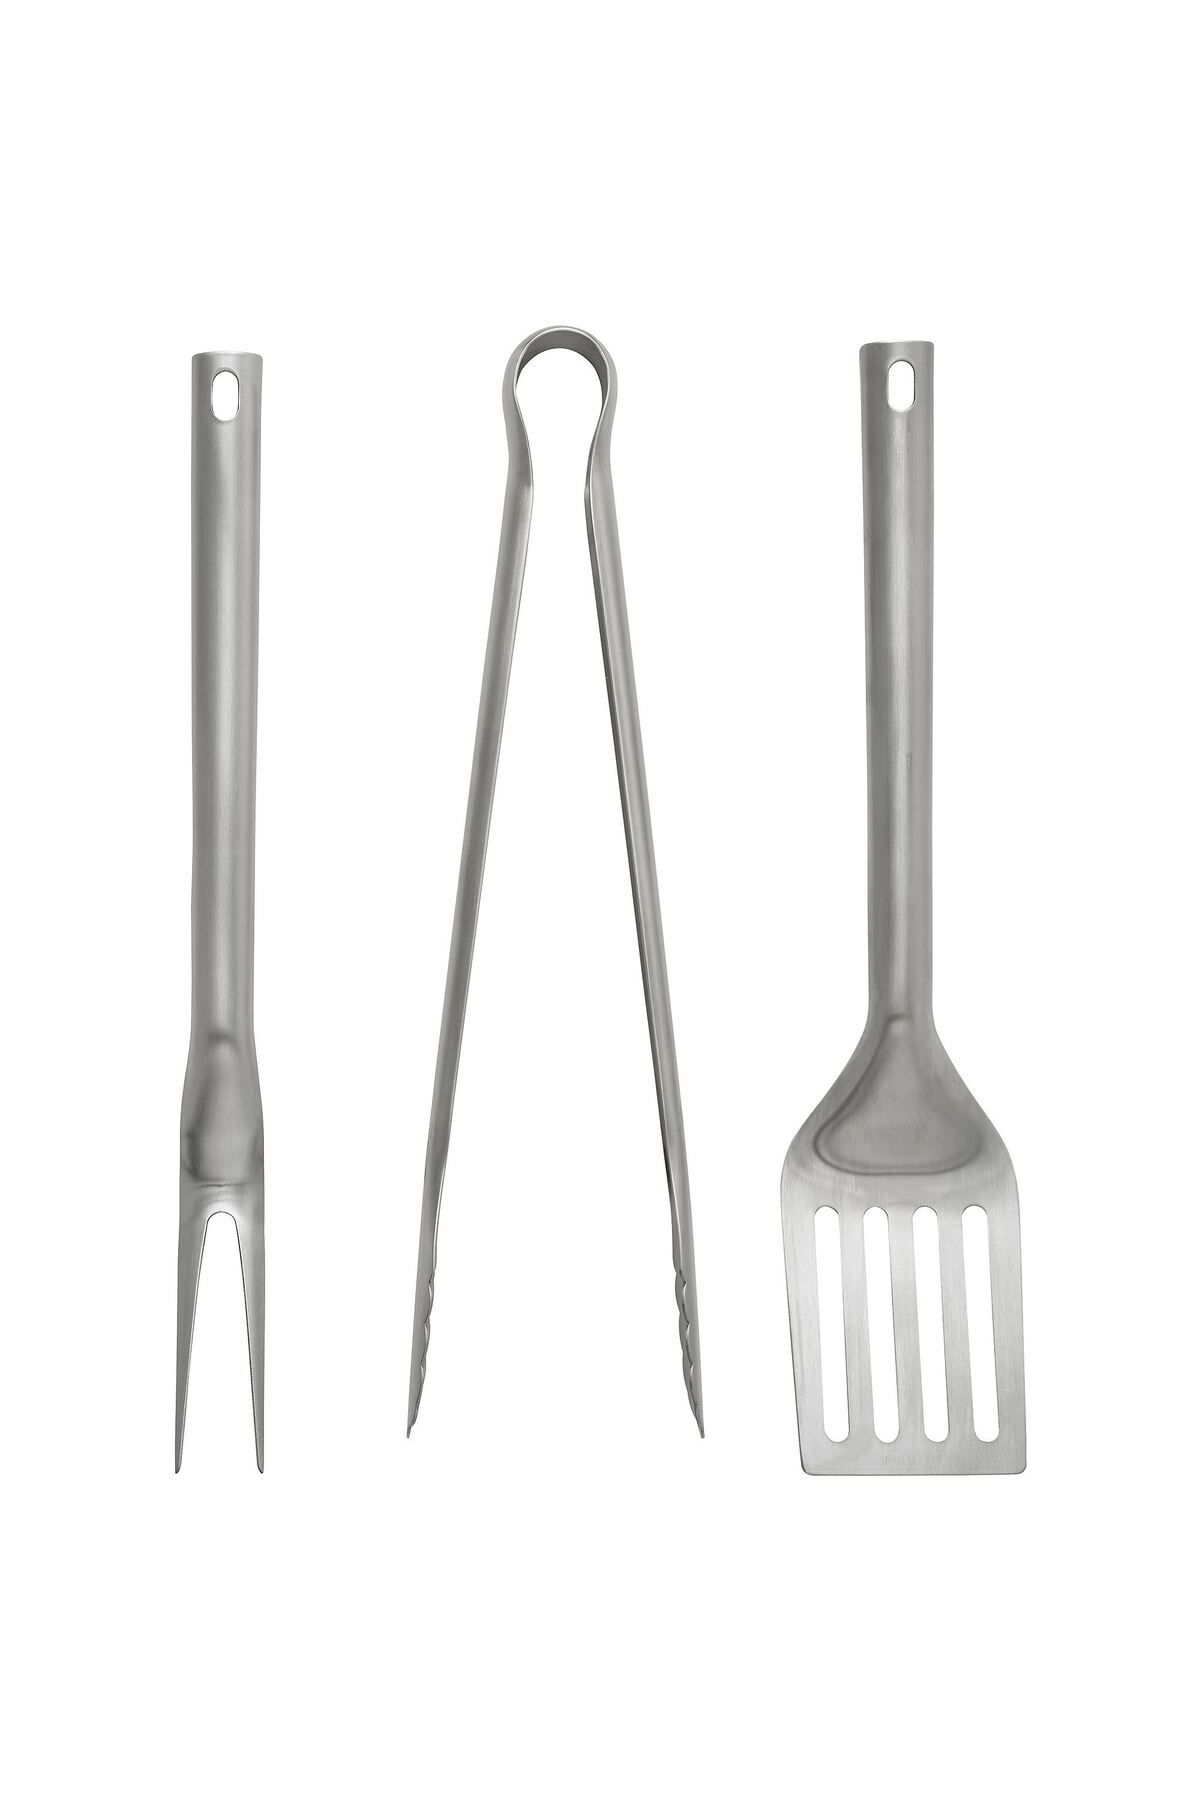 IKEA GRILLTIDER barbekü gereçleri seti, maşa, spatula ve barbekü bıçağı, paslanmaz çelik, 3 parça